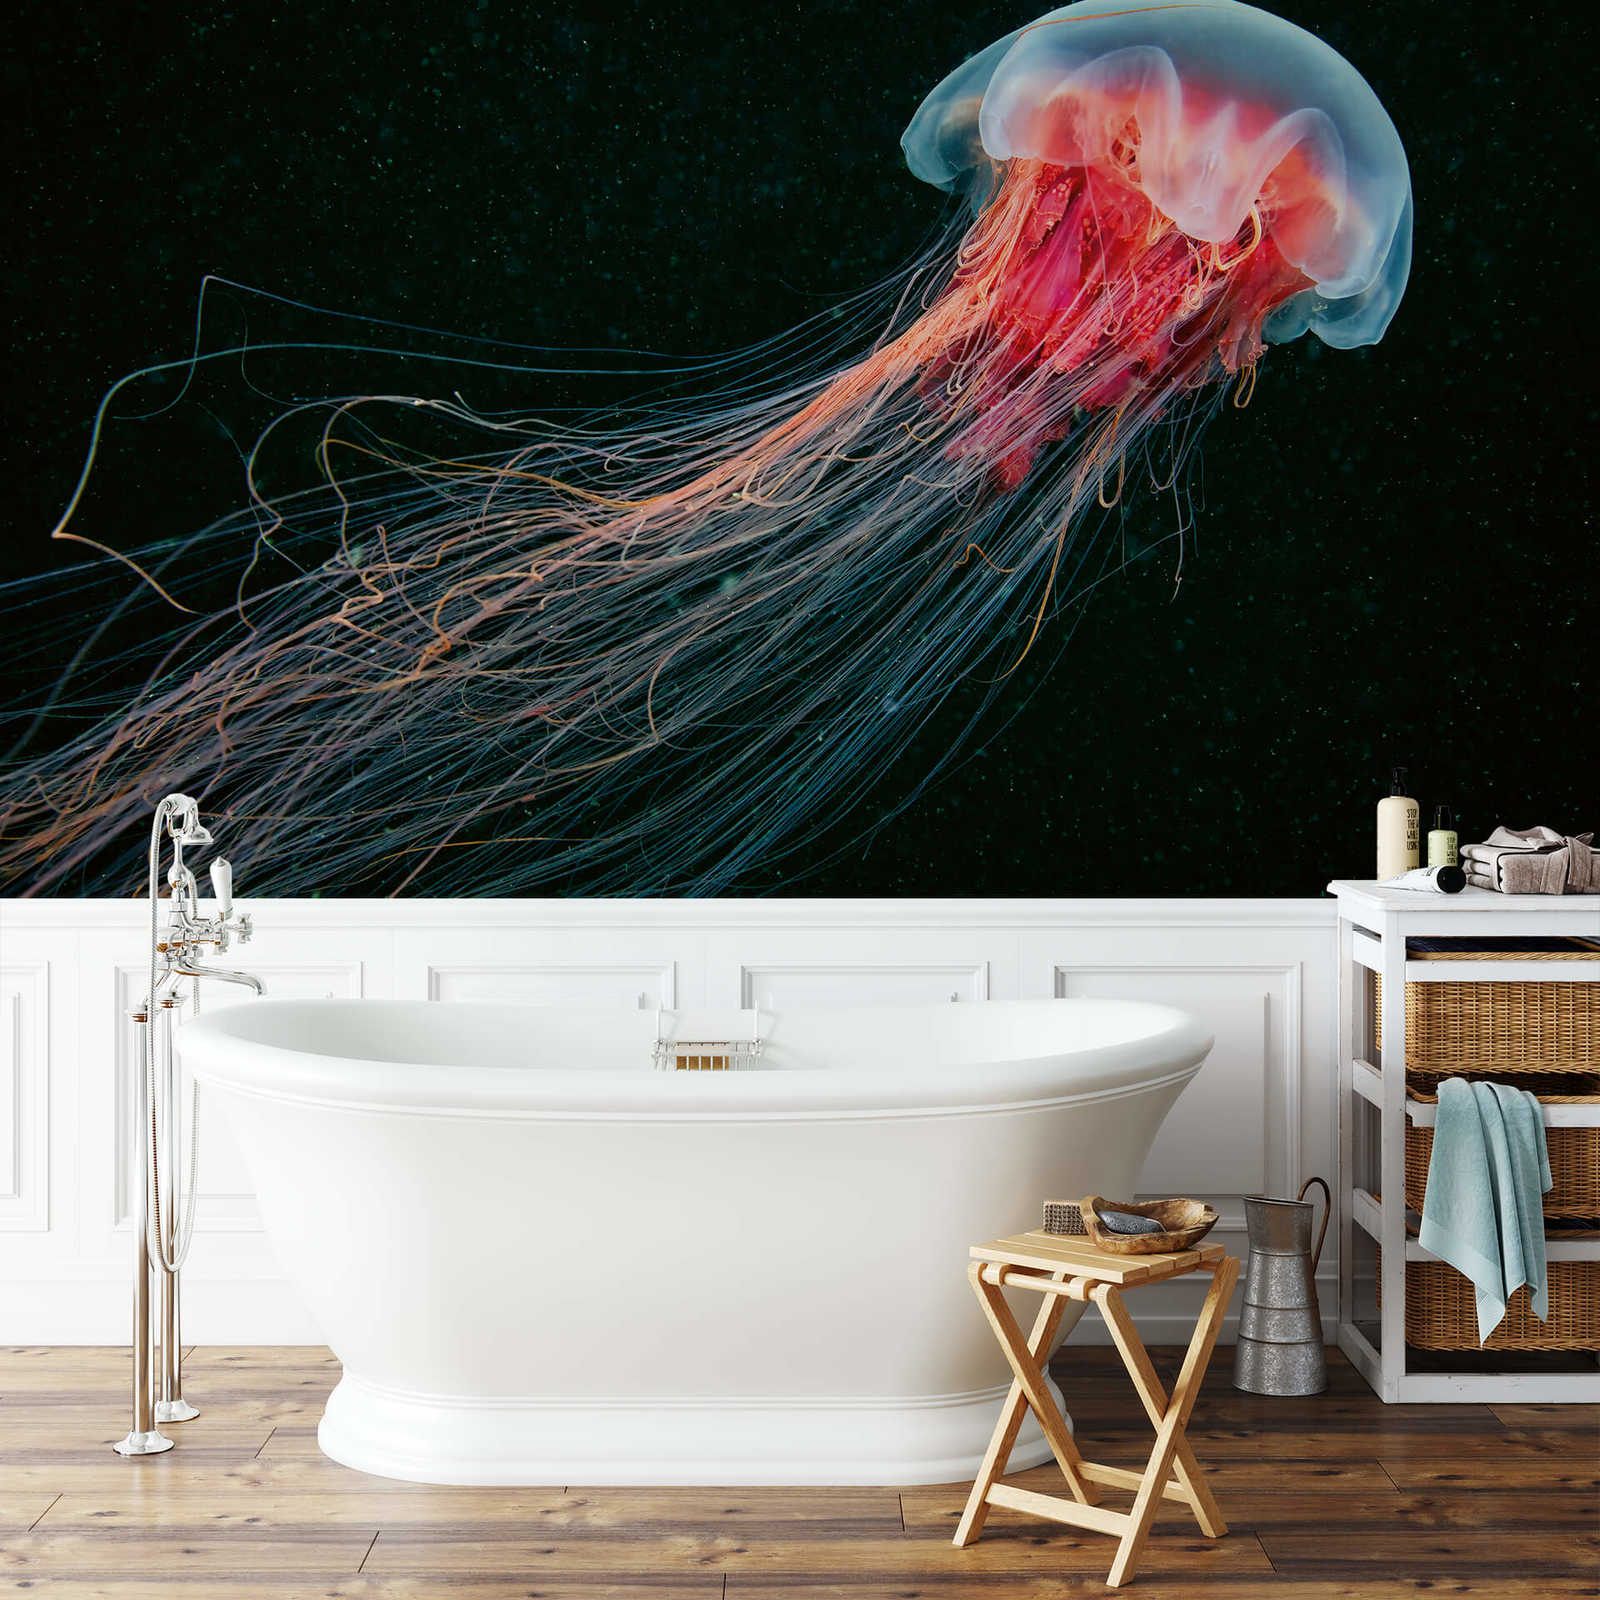             Photo wallpaper luminous jellyfish in water - blue, red
        